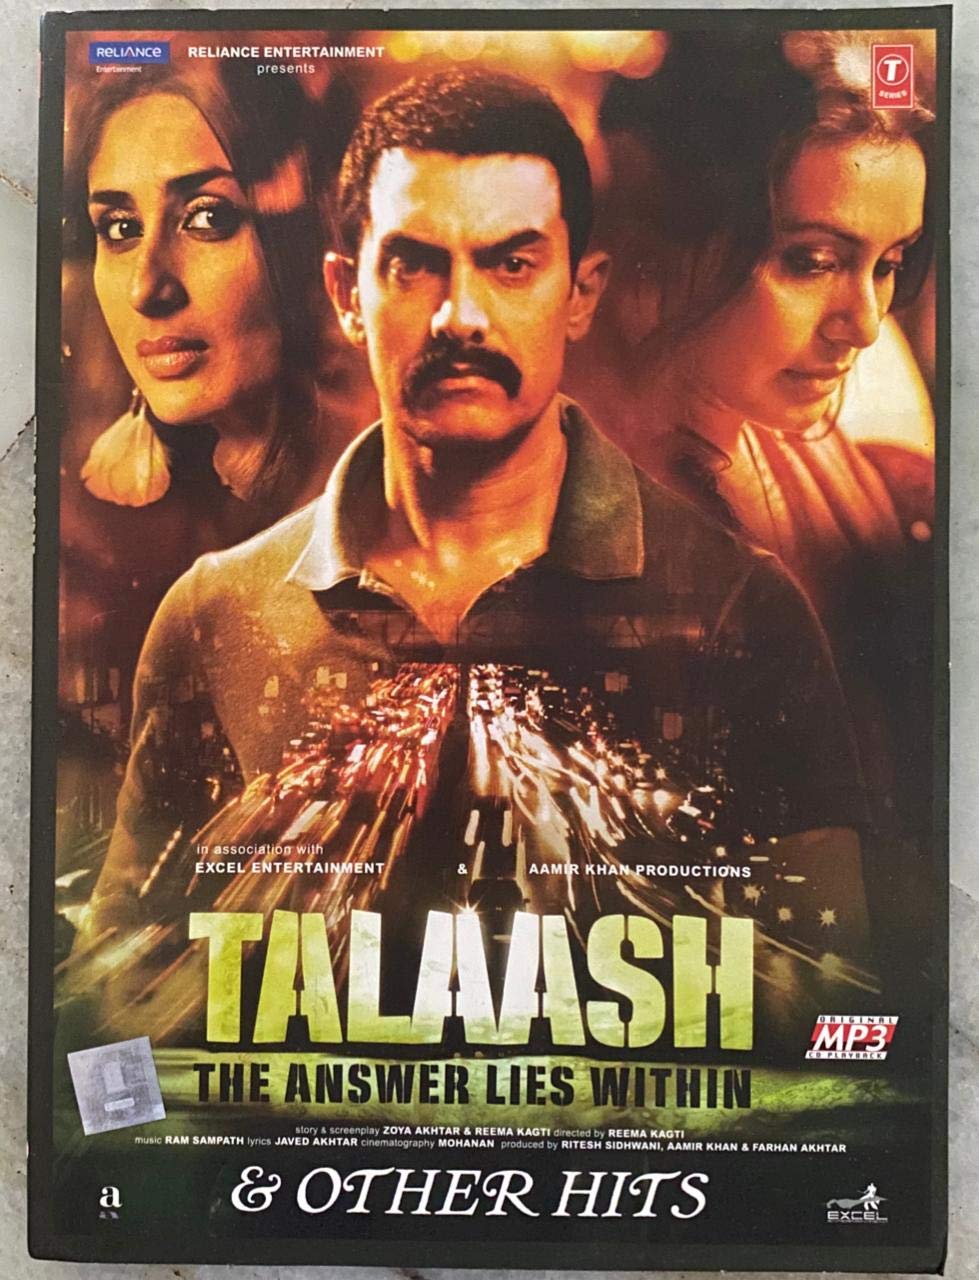 watch talaash movie online free 2012 hd